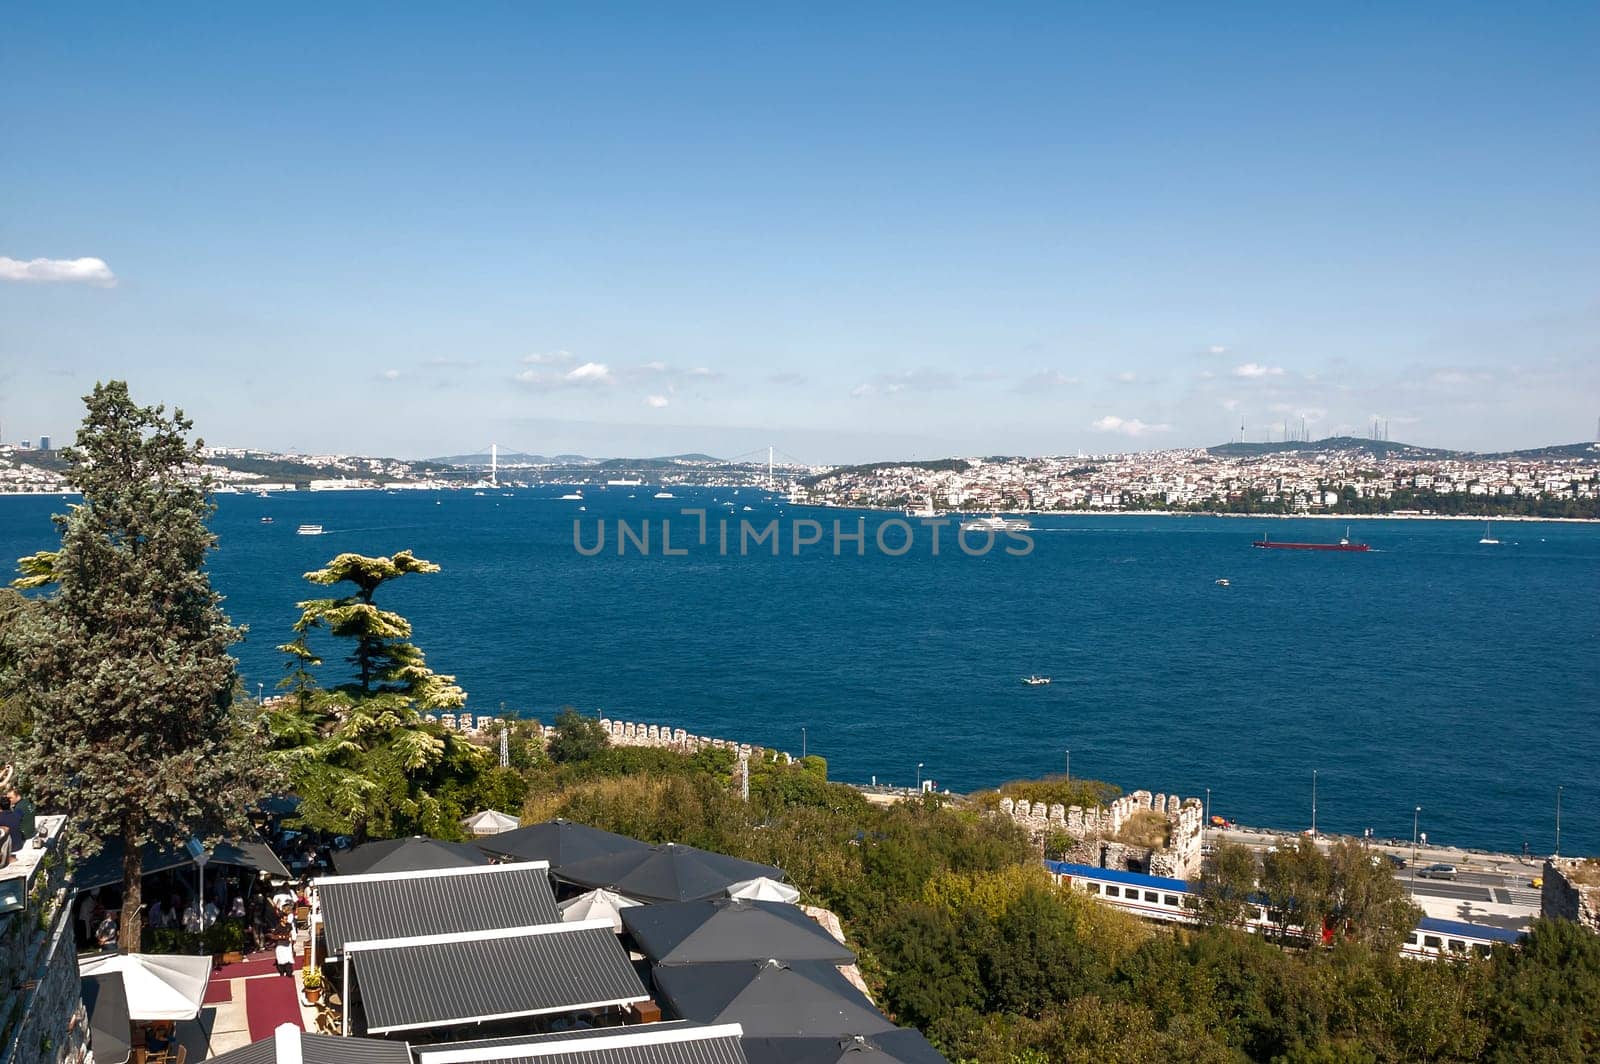 The Bosphorus. by Giamplume